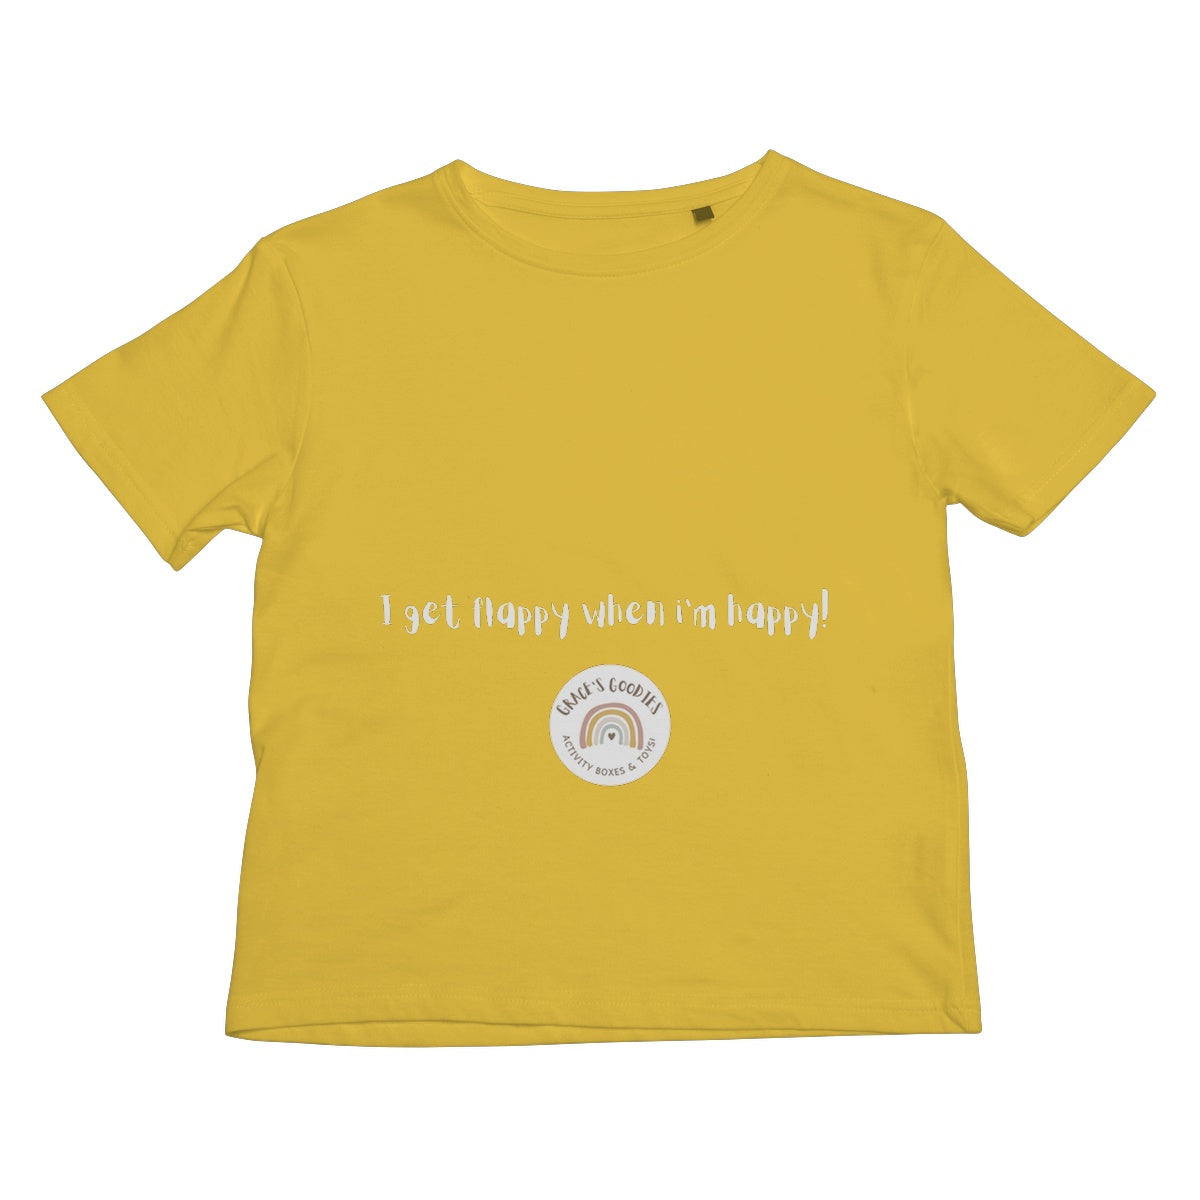 I get flappy when i'm happy Kids T-Shirt